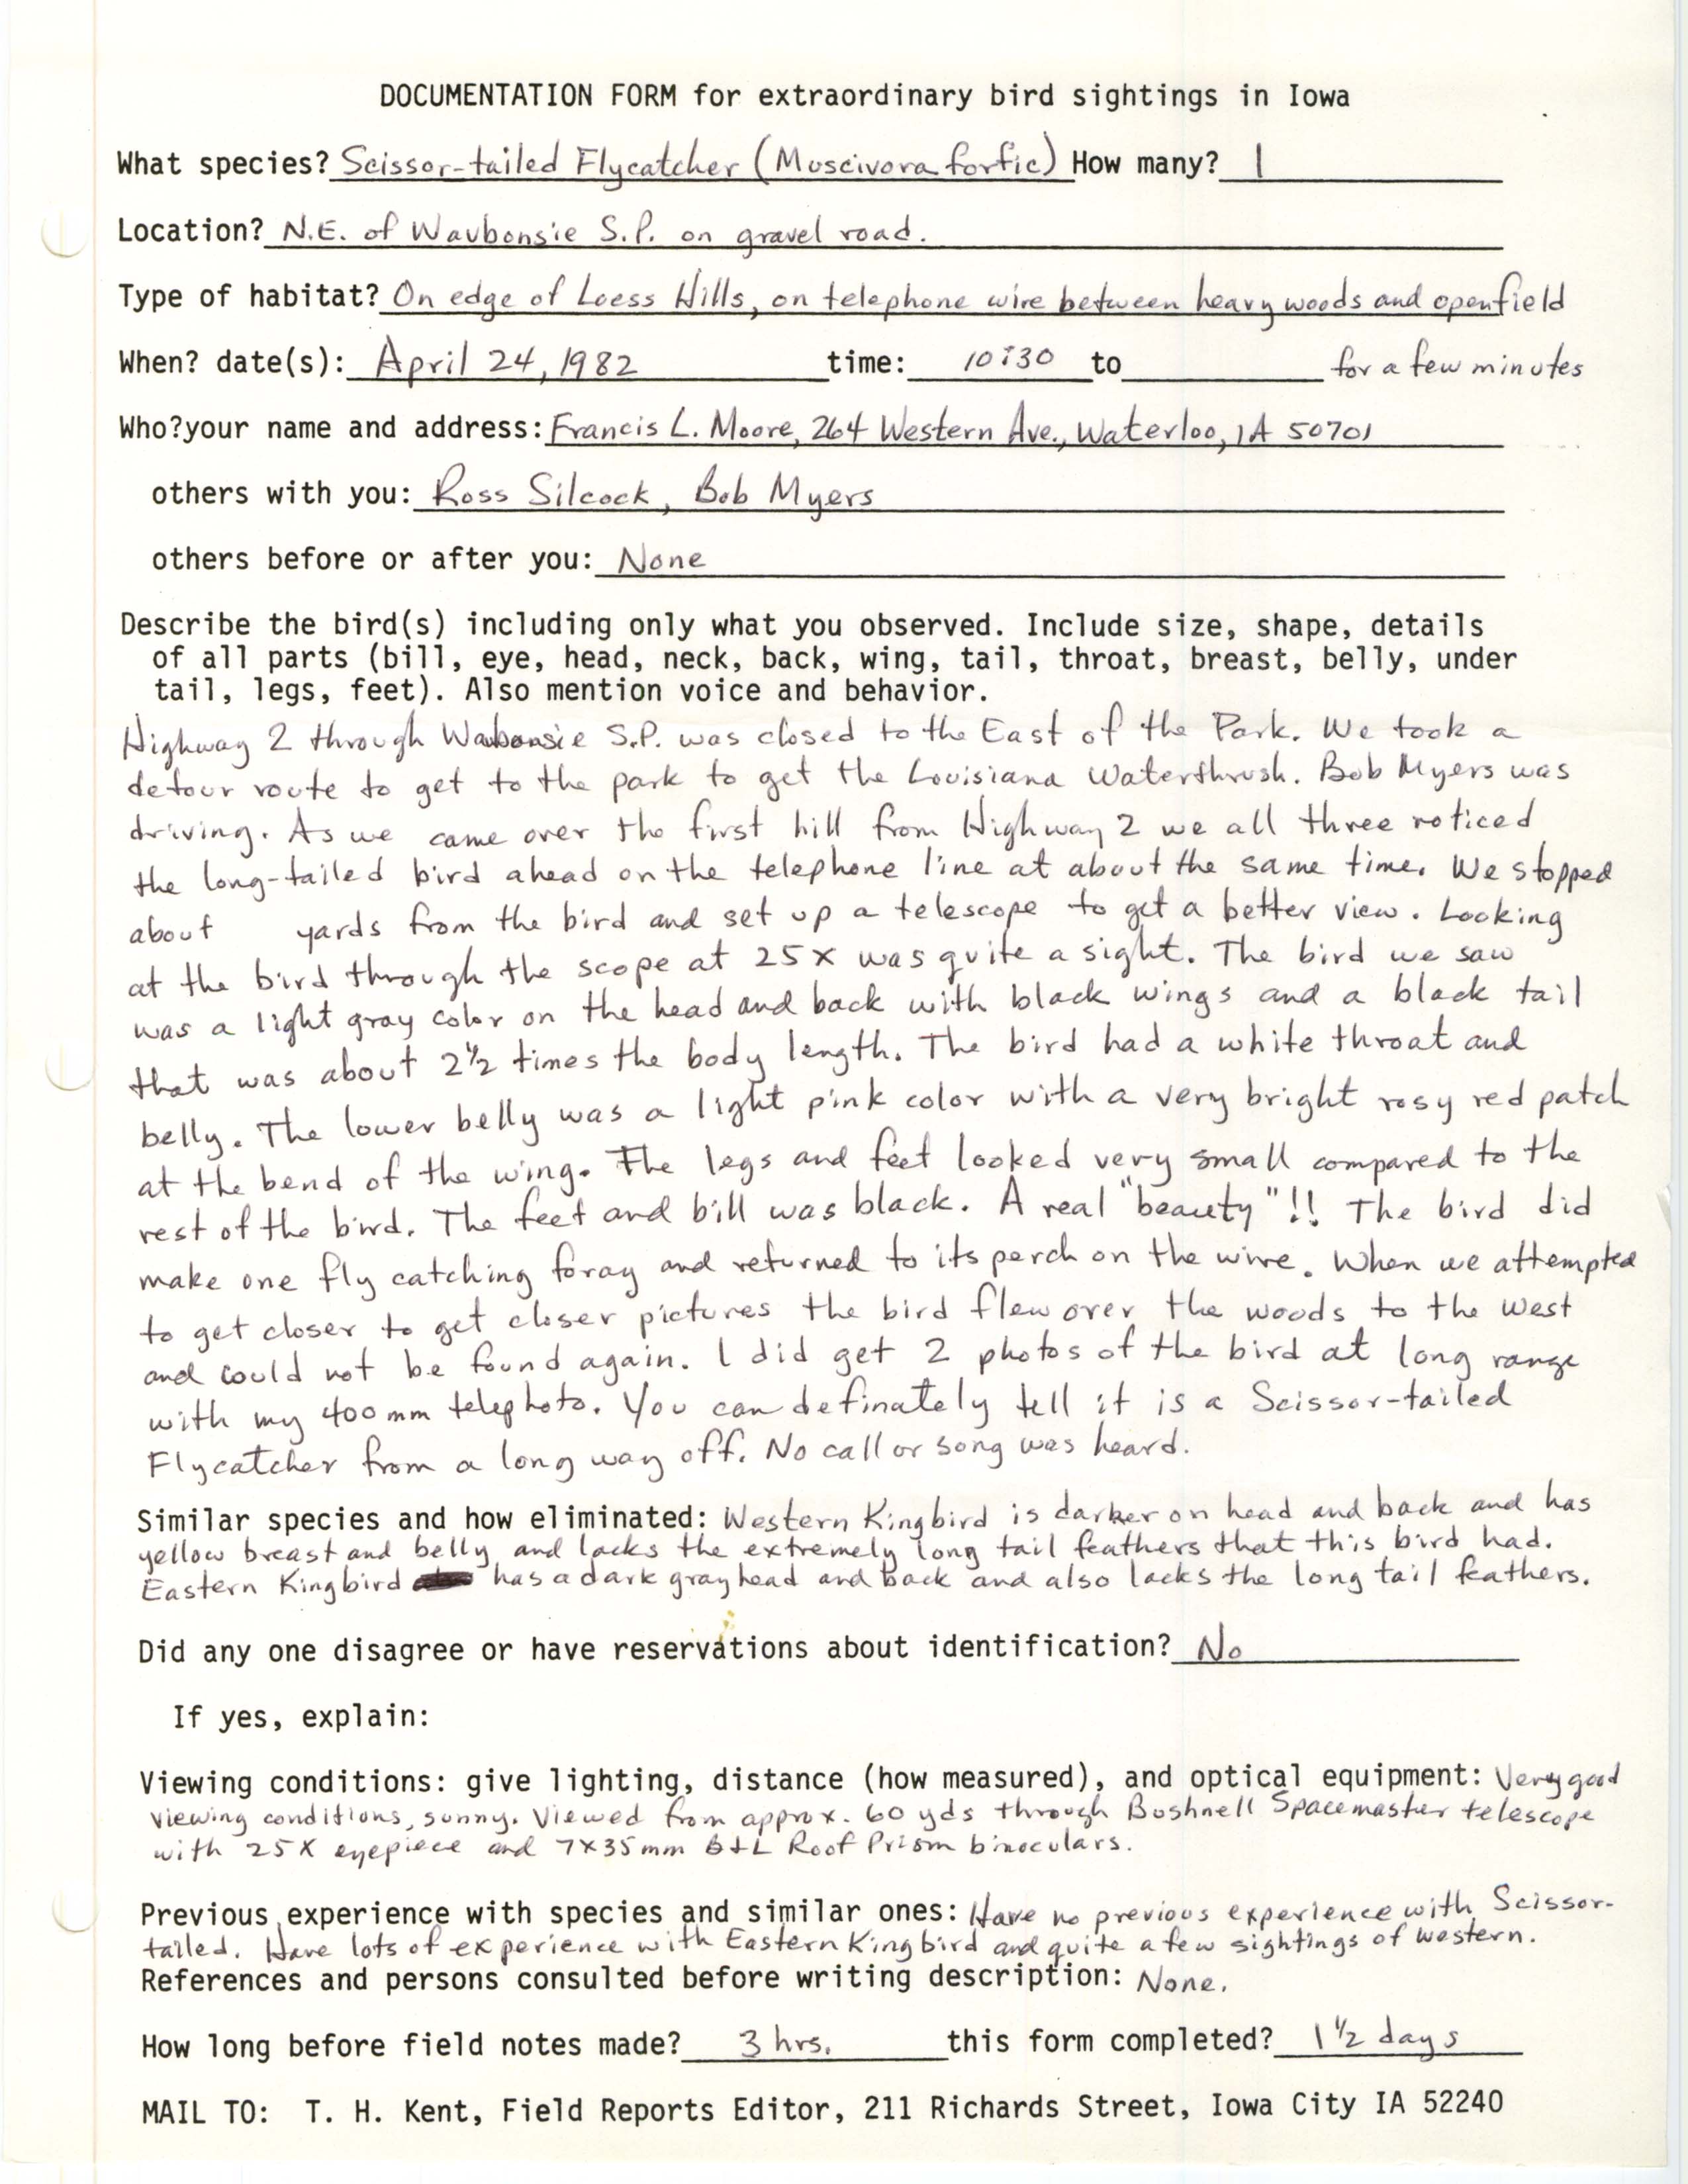 Rare bird documentation form for Scissor-tailed Flycatcher northeast of Waubonsie State Park, 1982